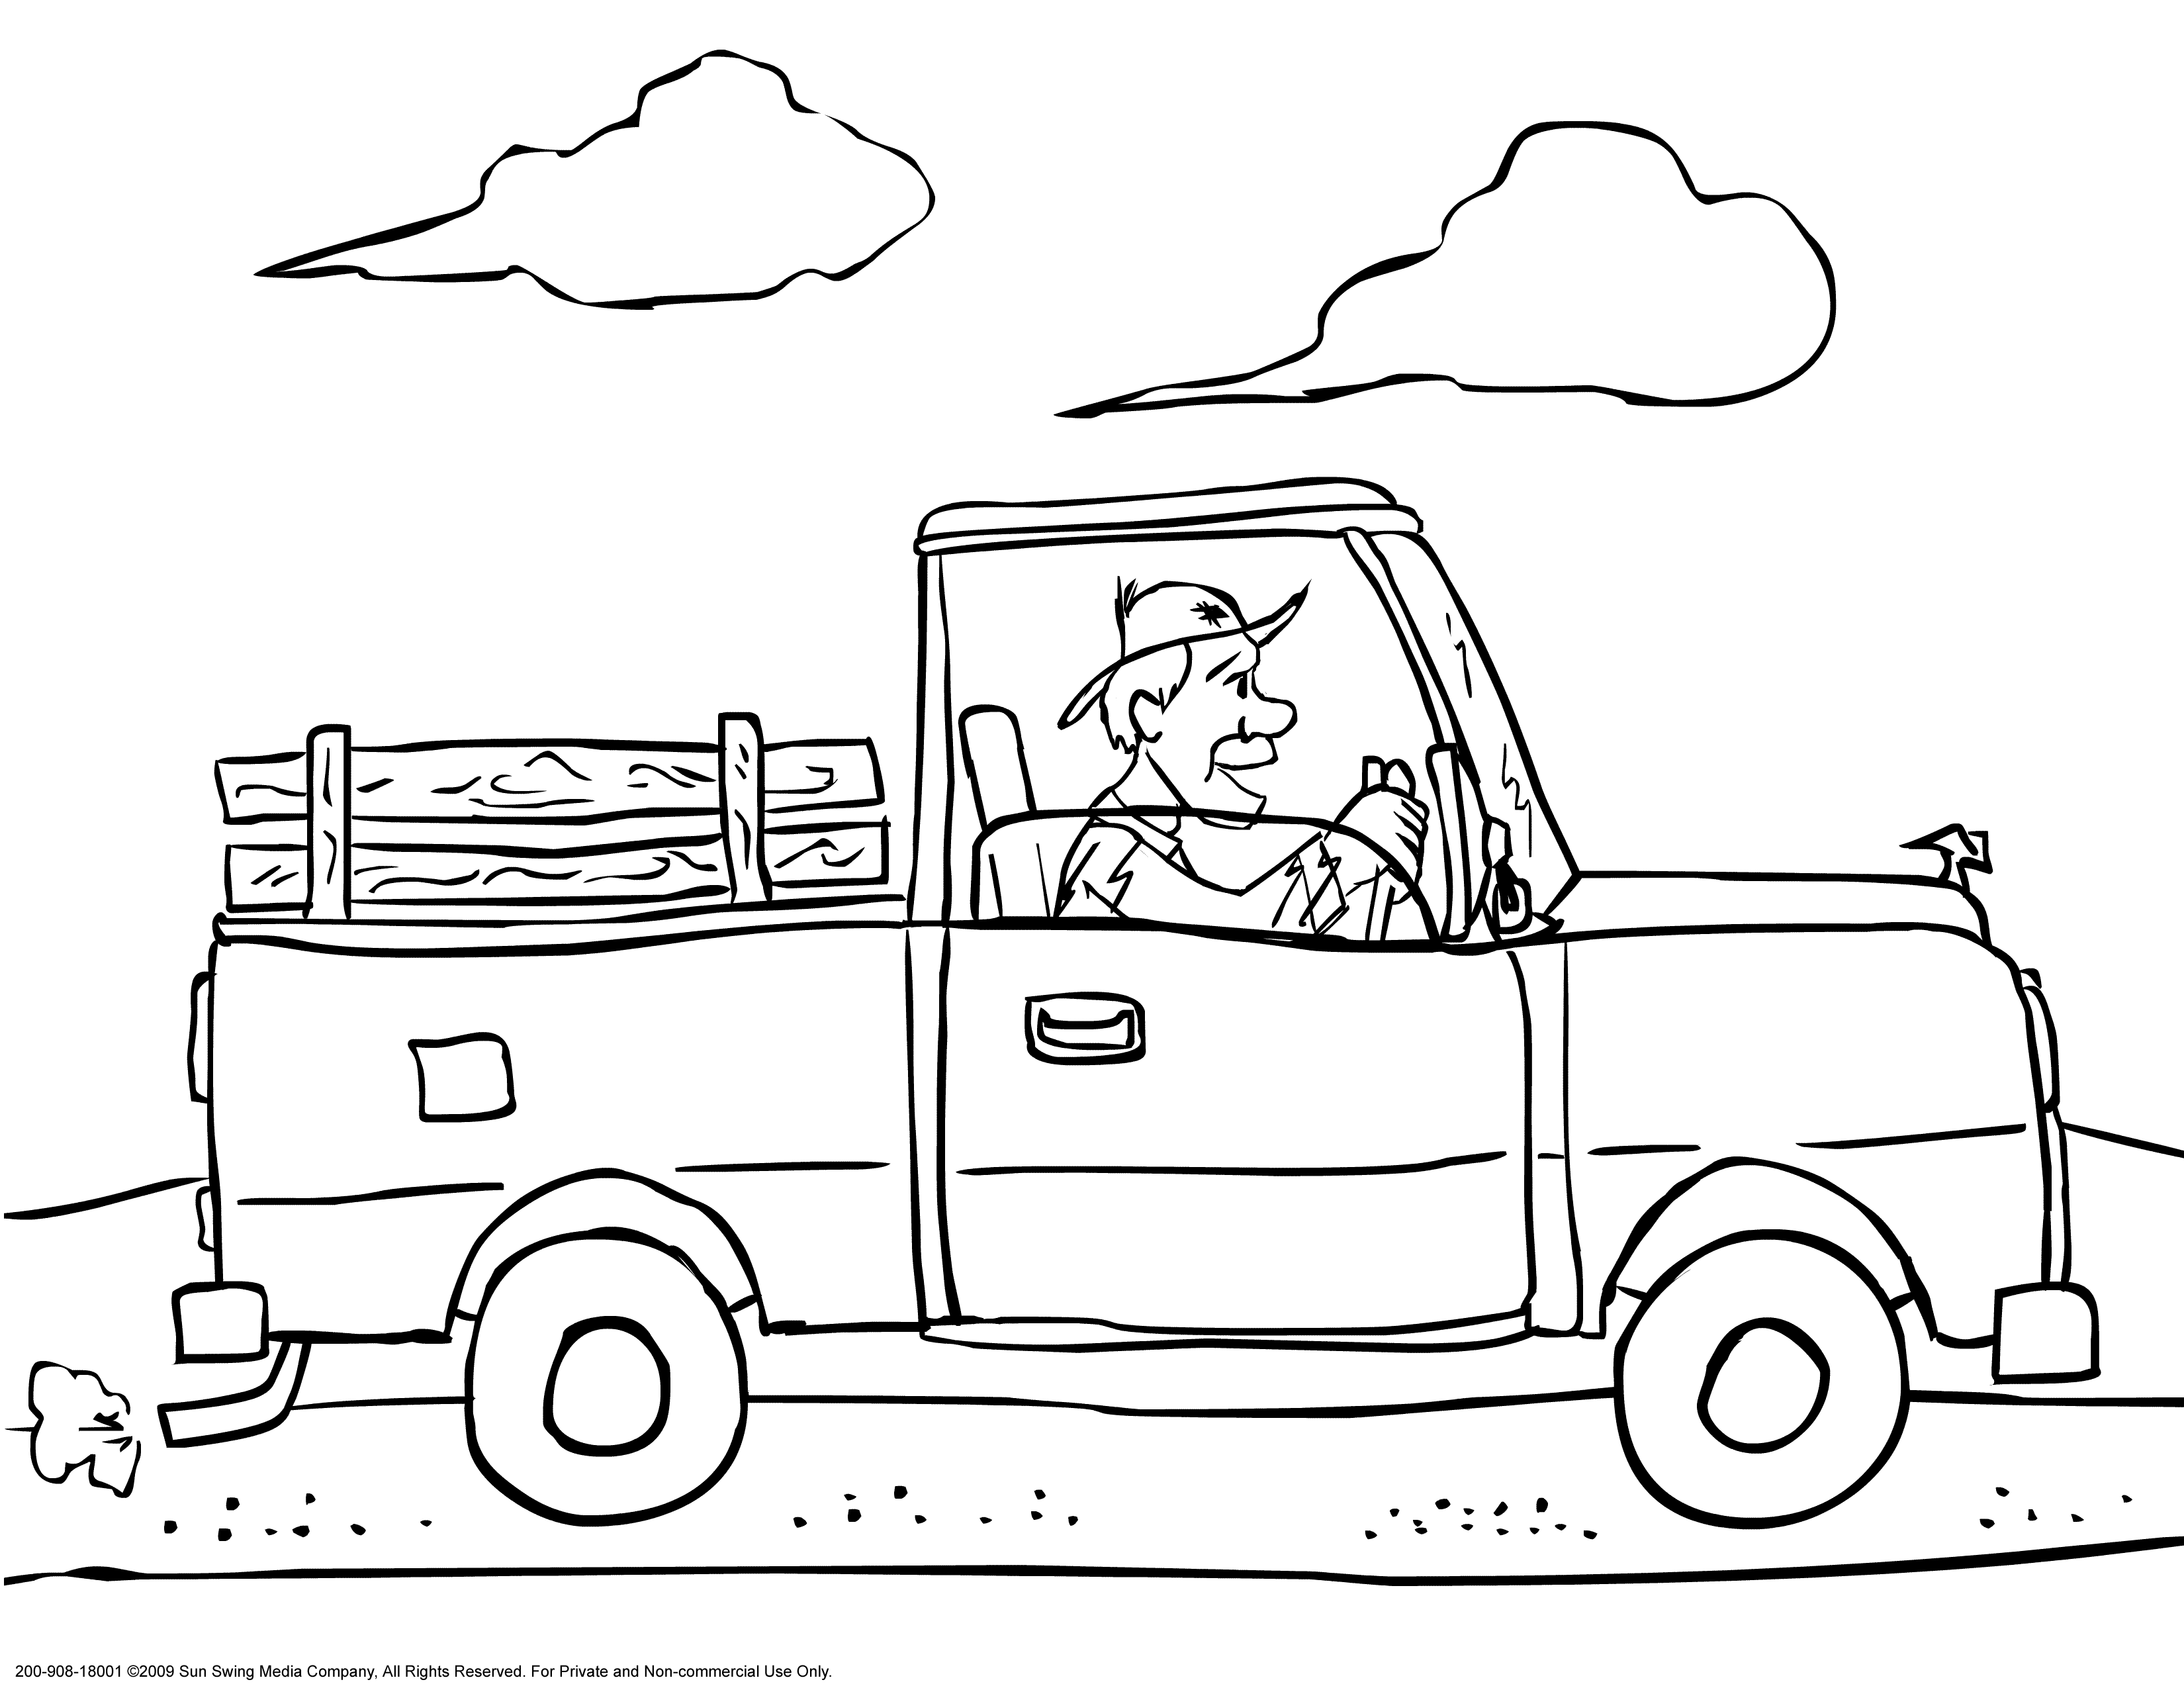 Free coloring pages trucks - letscoloringpages.com - Antique Truck